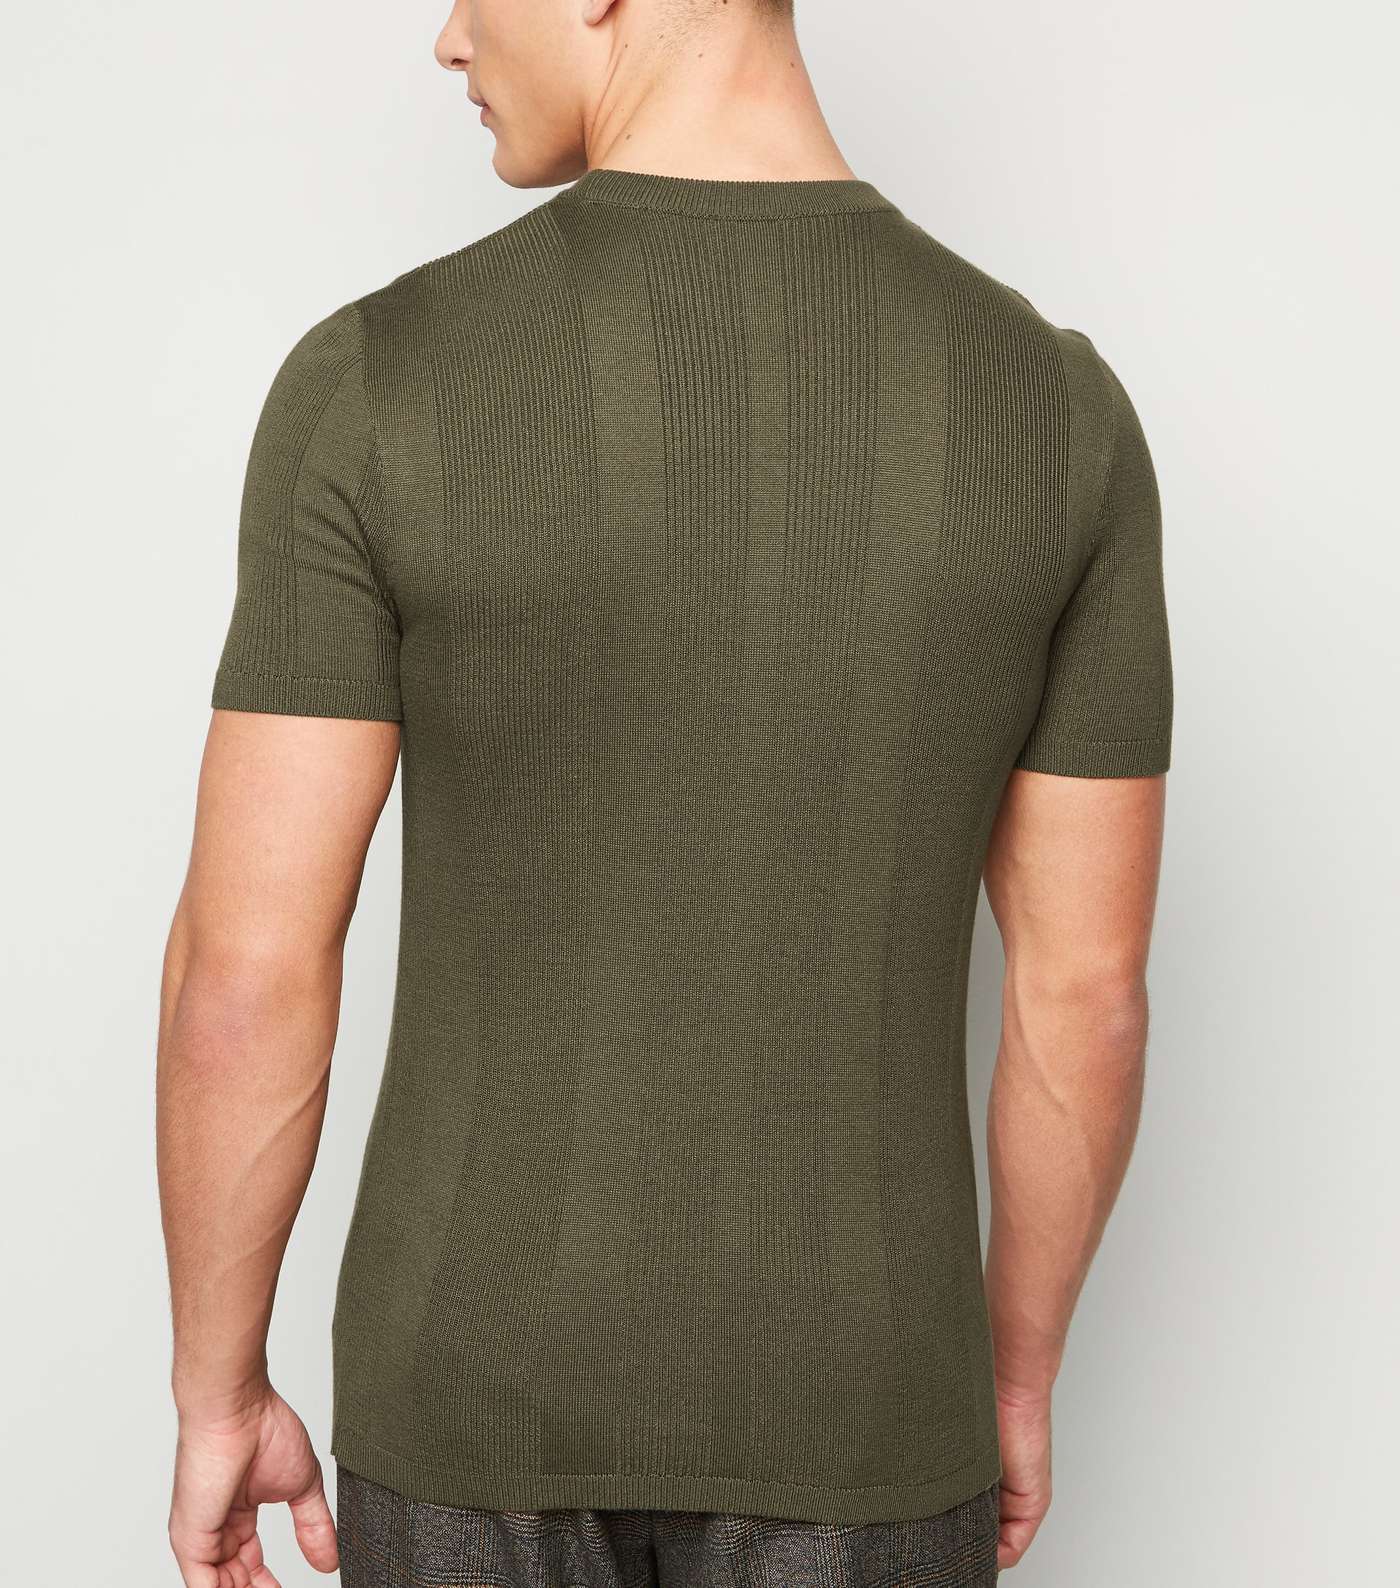 Khaki Ribbed Knit Muscle Fit T-Shirt Image 3